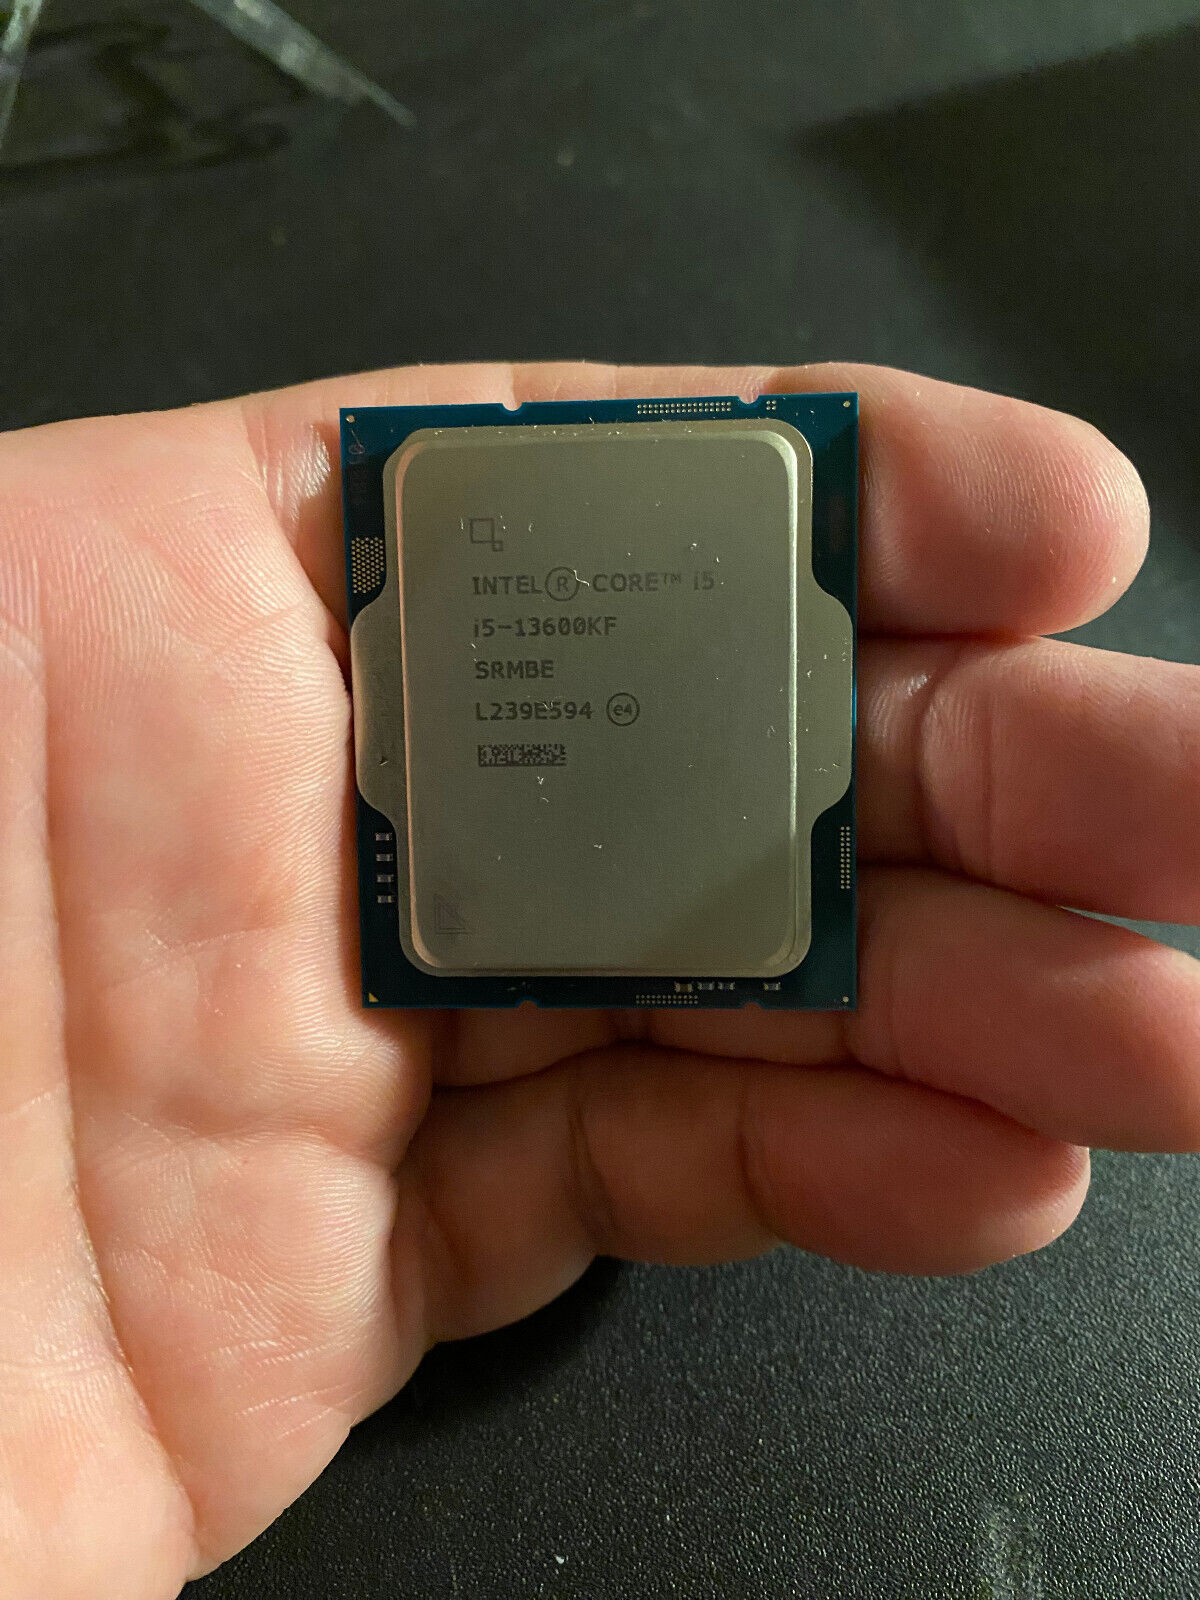 Intel Core i5-13600KF Processor (5.1 GHz, 14 Cores, LGA 1700) Box -...